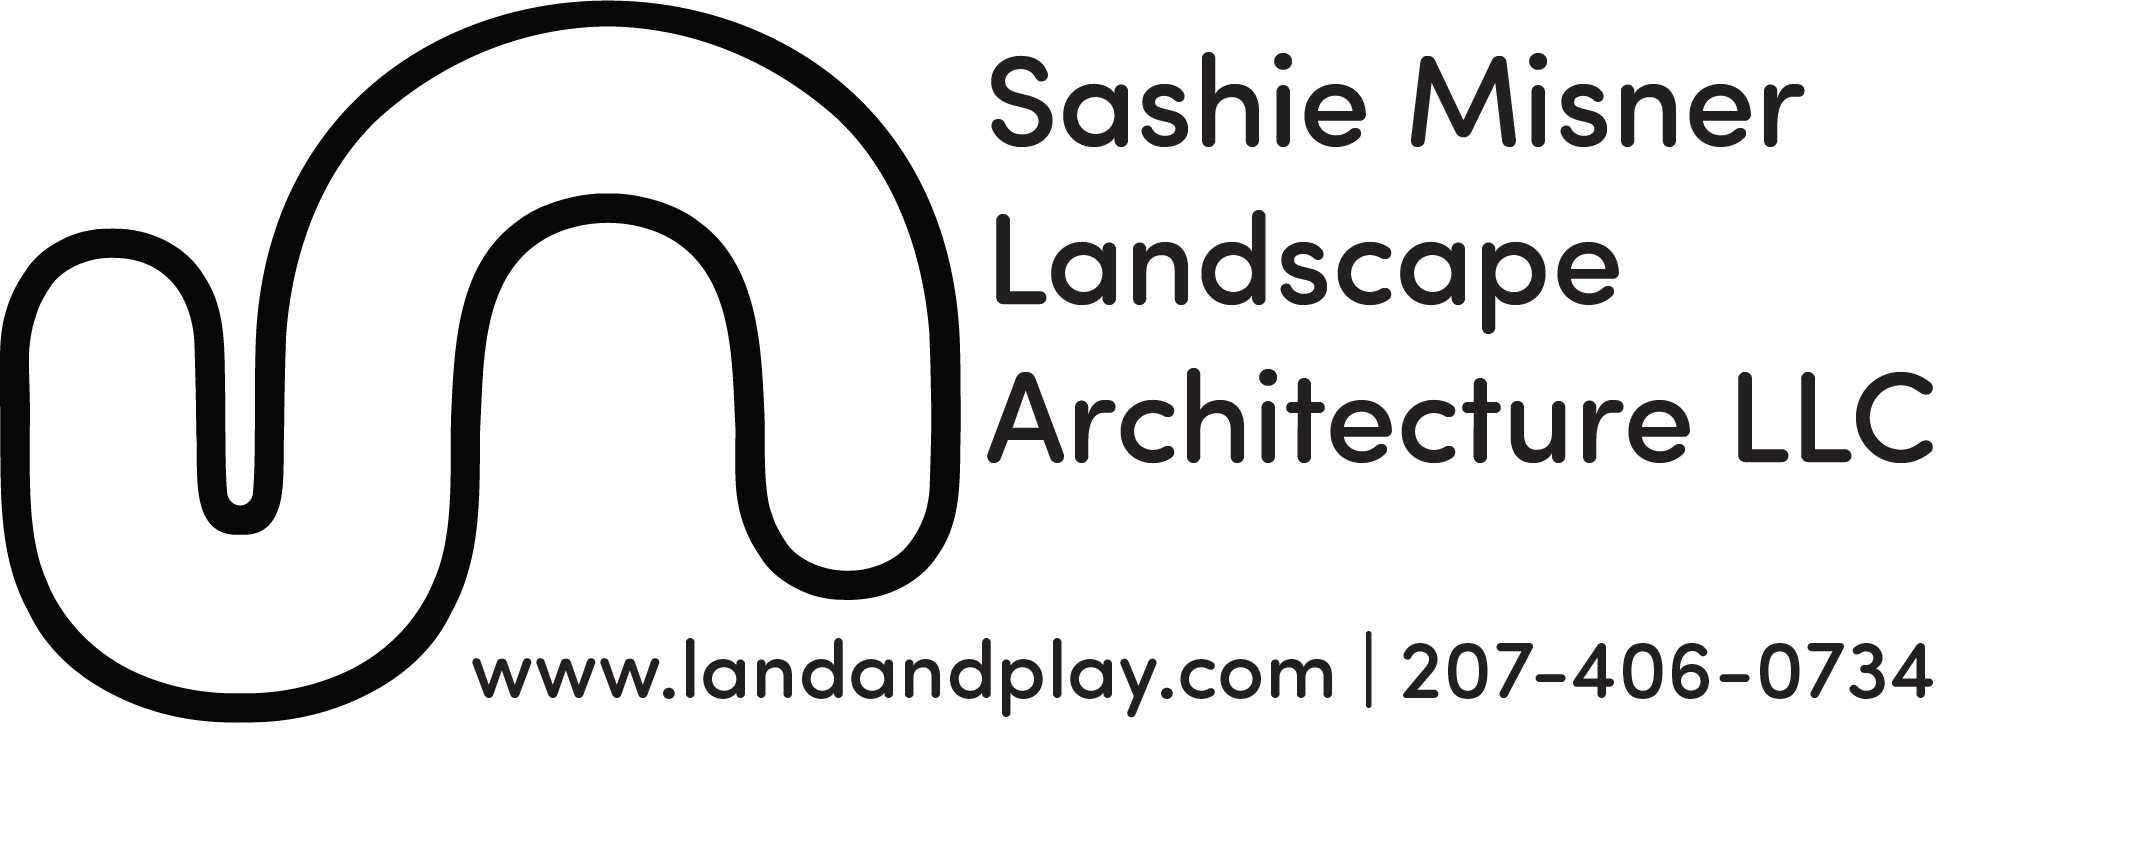 SASH logo horiz spacellc - Sashie M.png